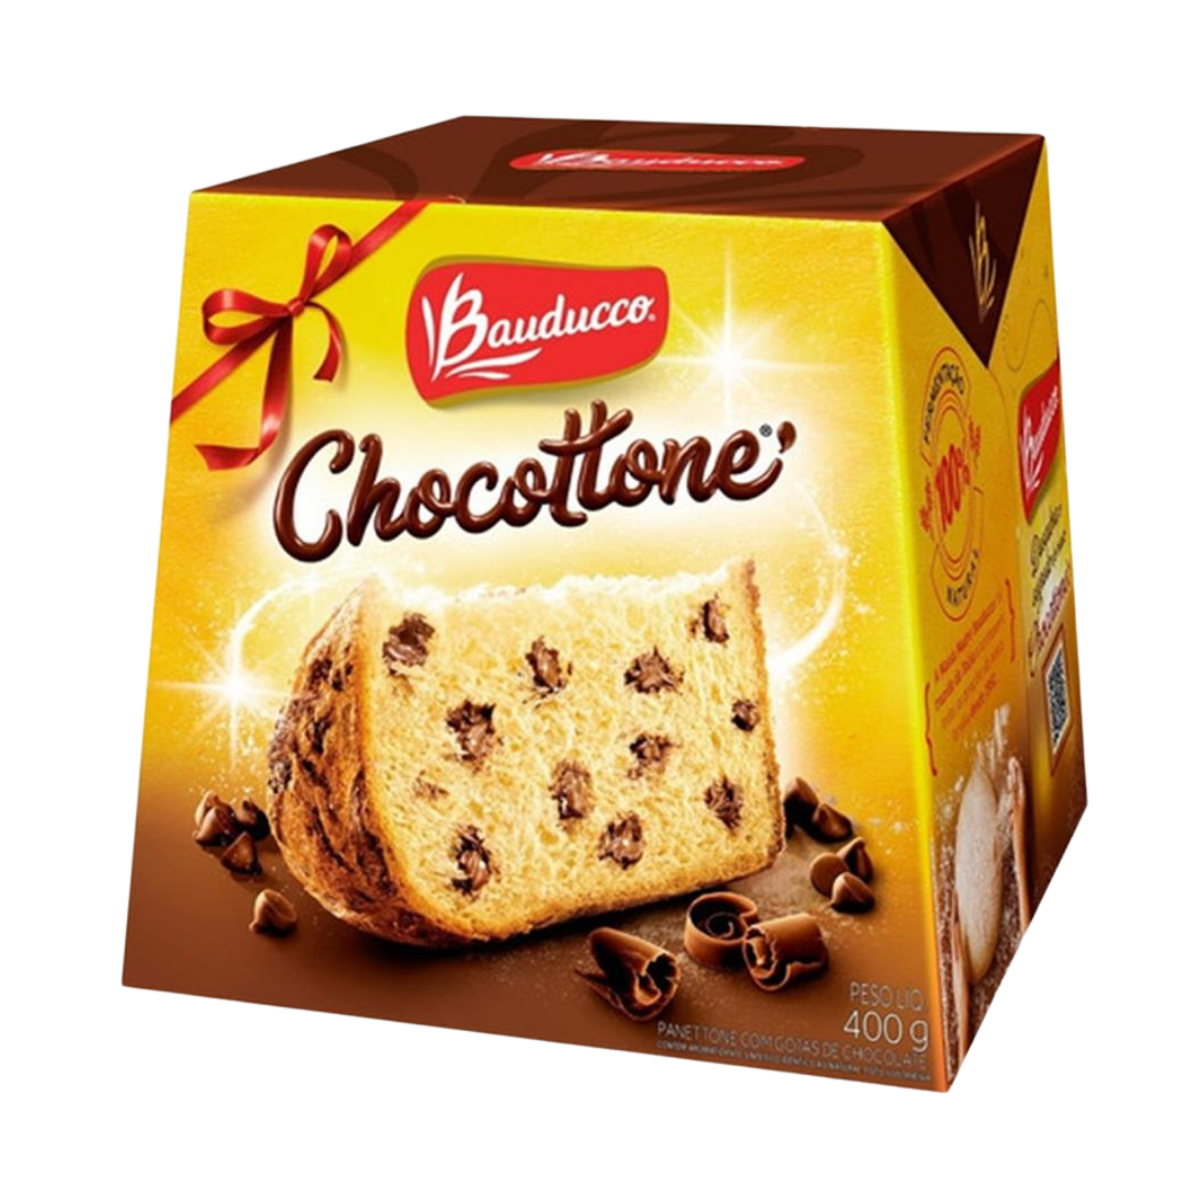 Bauducco Chocolate Chip Panettone 454g- close to expire